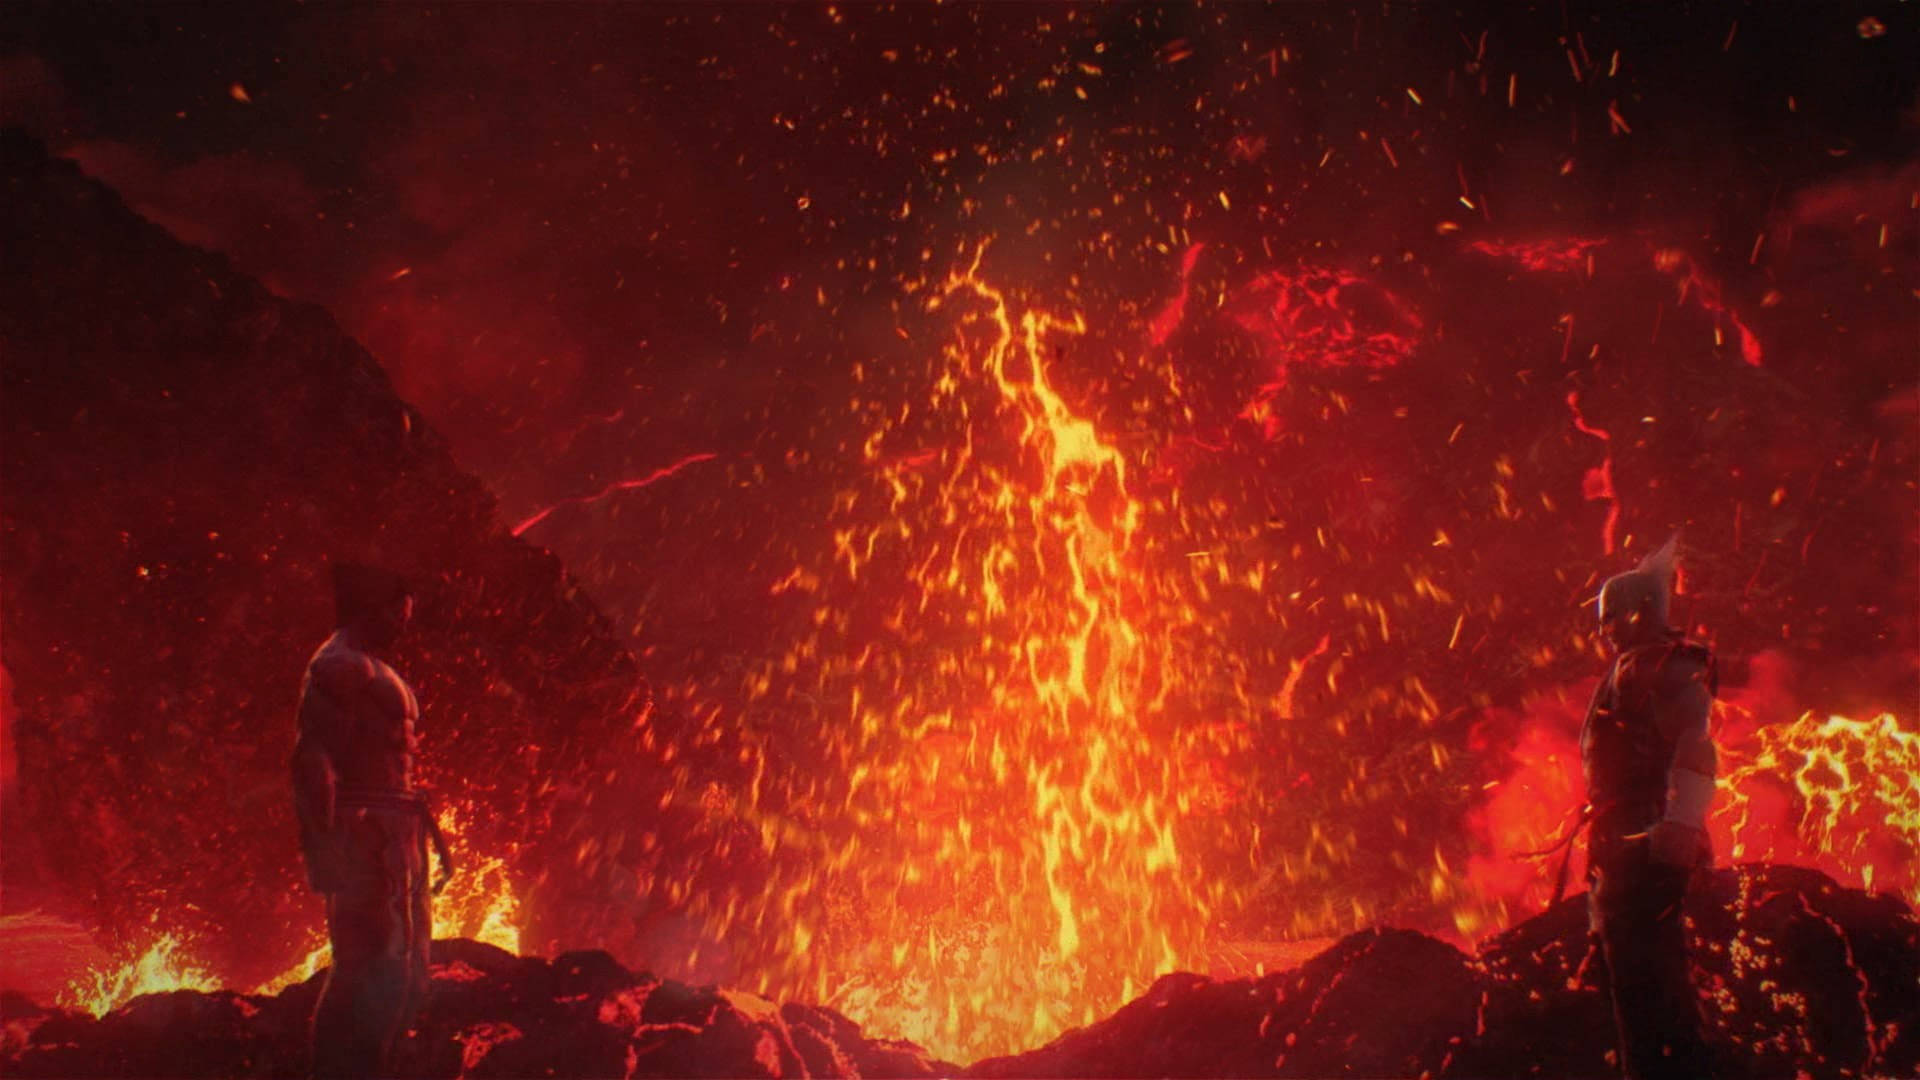 Kazuya Mishima Battle In Lava Wallpaper